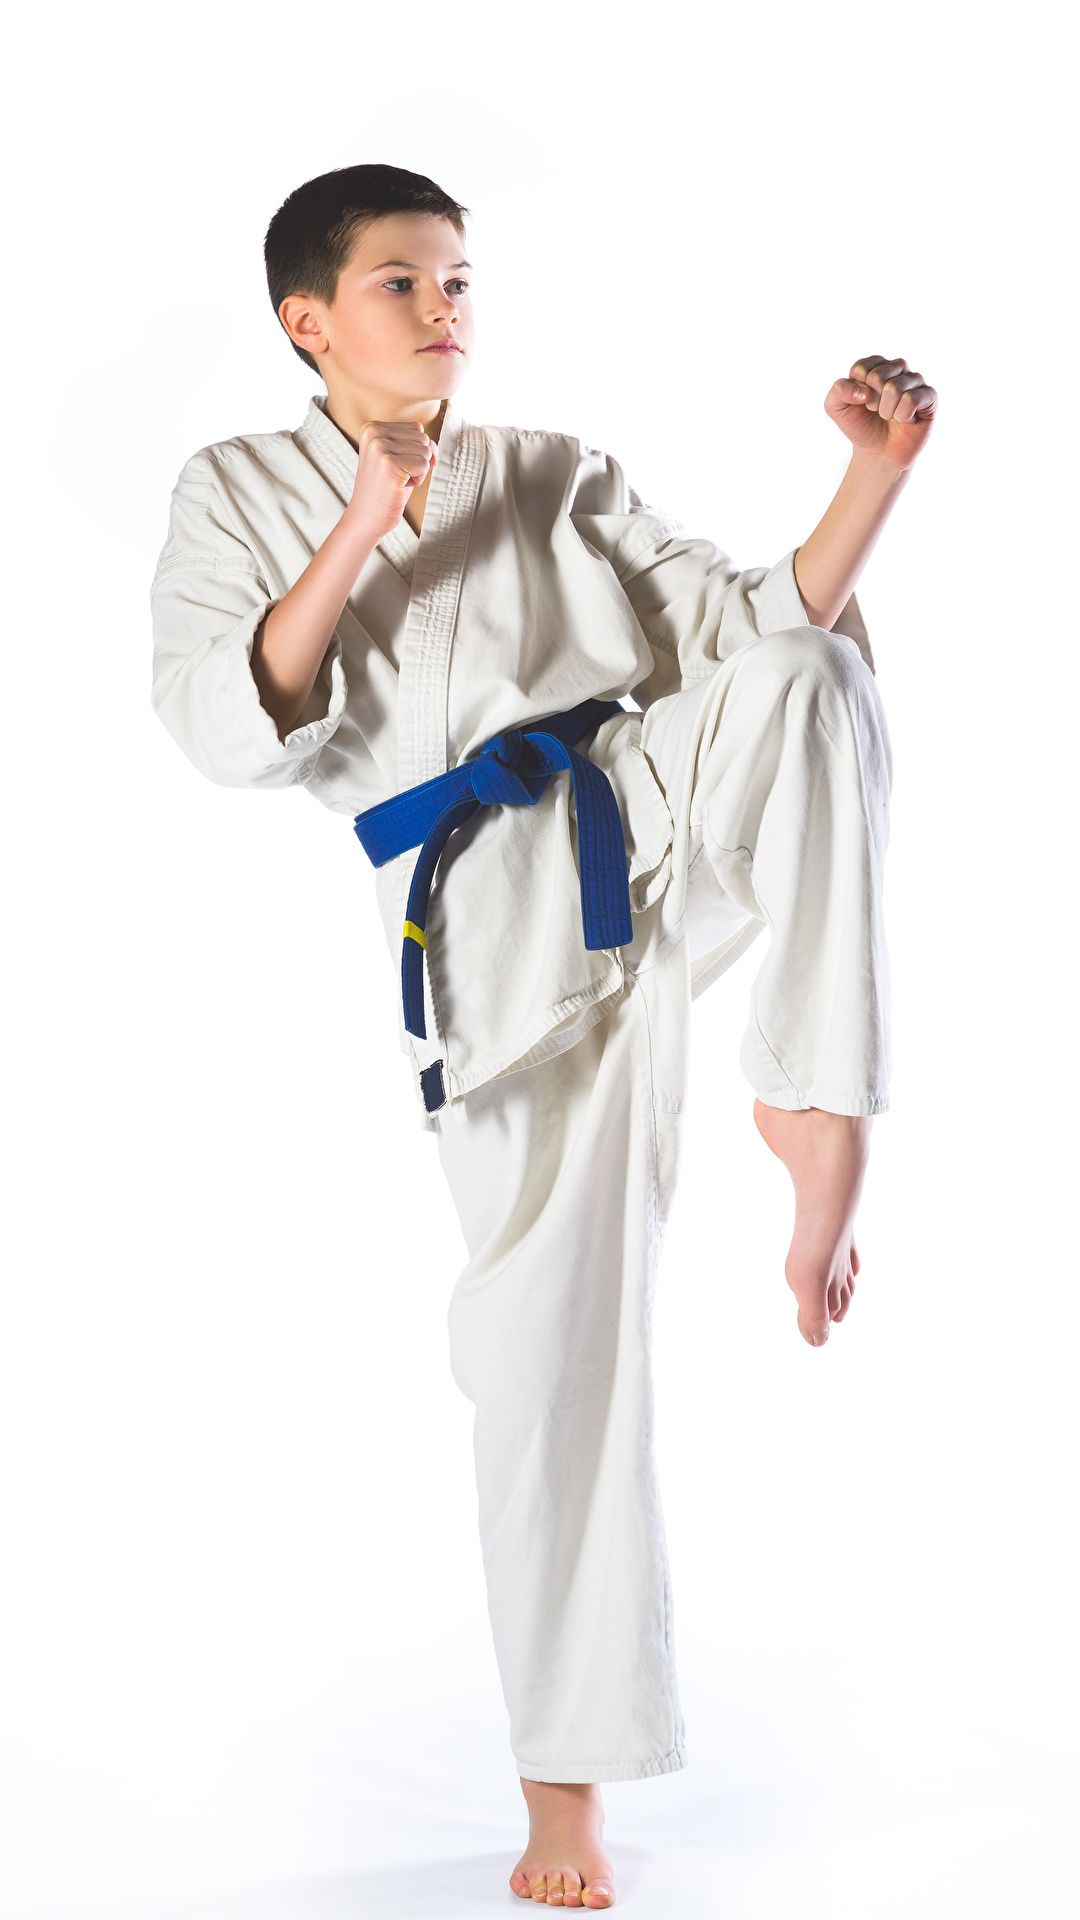 Photos Boys Workout Karate child Hands Uniform White 1080x1920